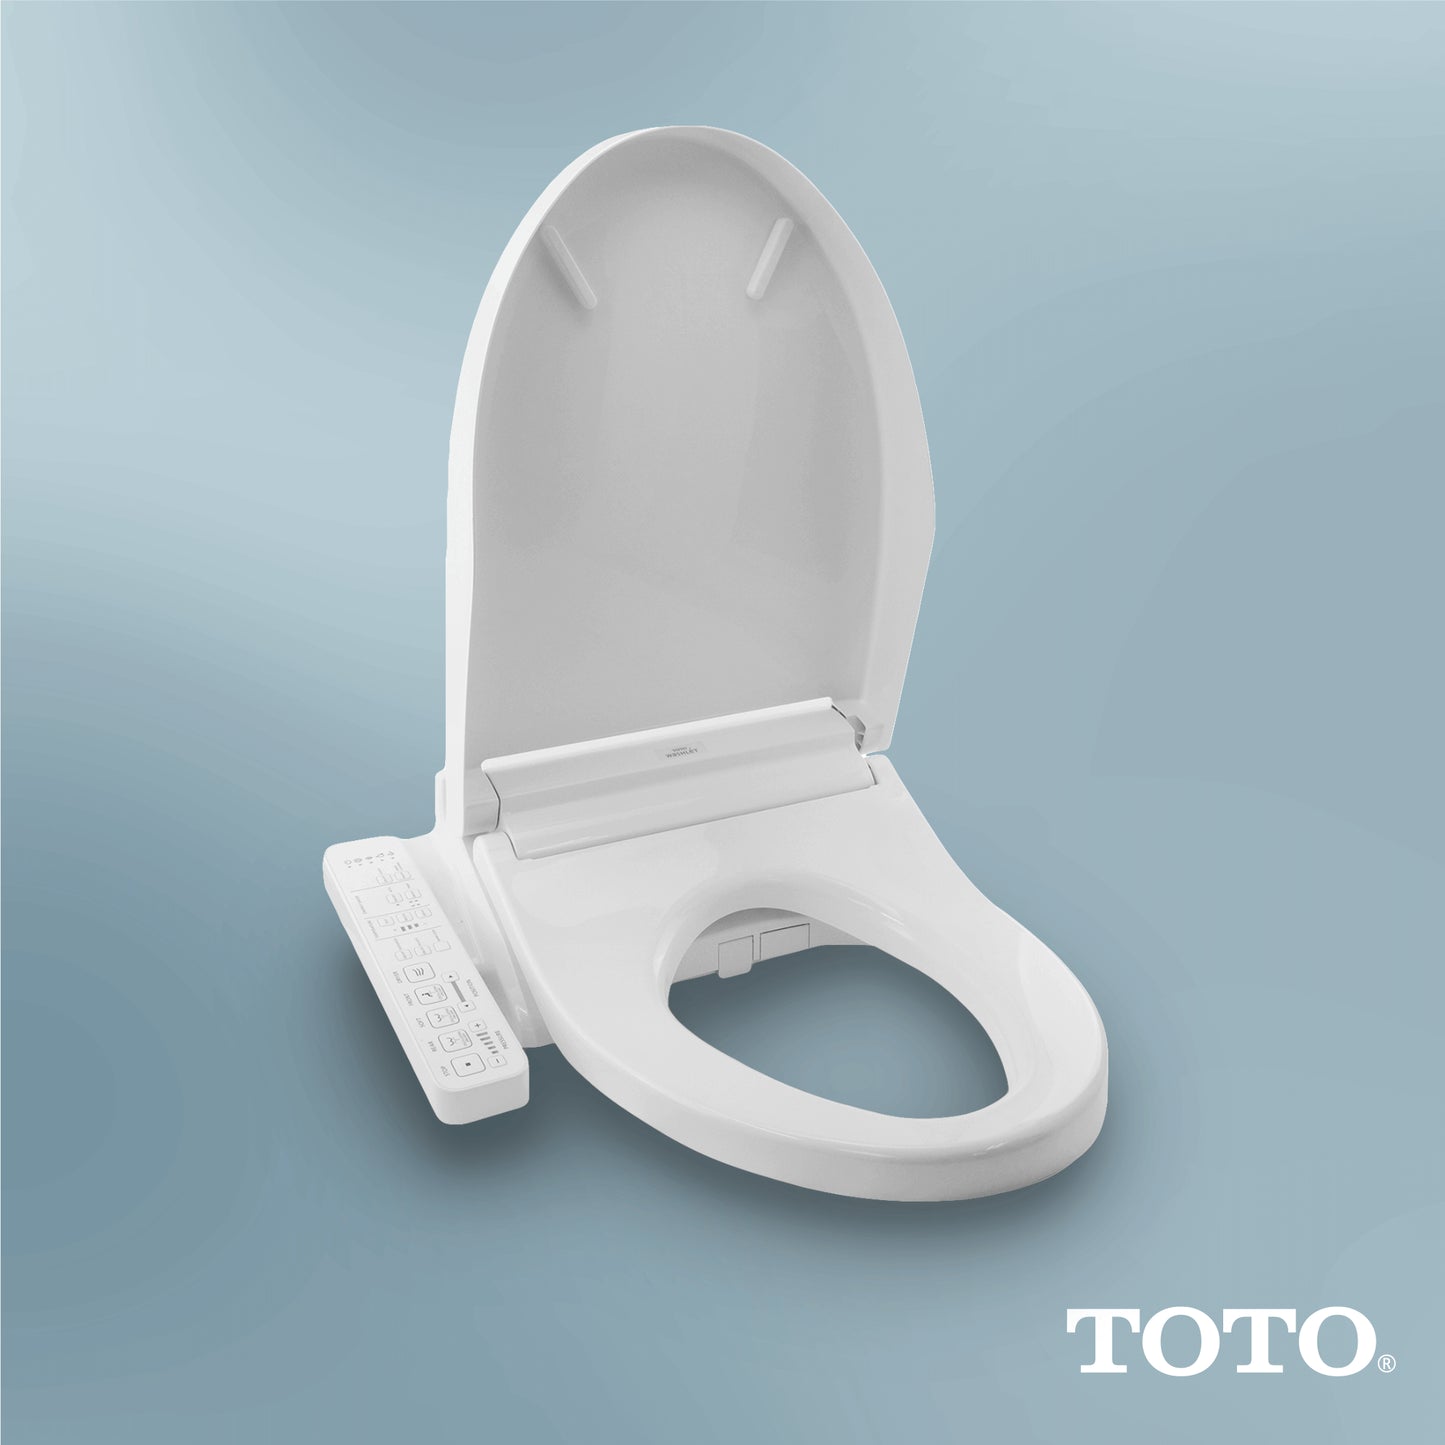 TOTO WASHLET C2 Bidet Toilet Elongated Seat with Side Panel Controls - SW3074